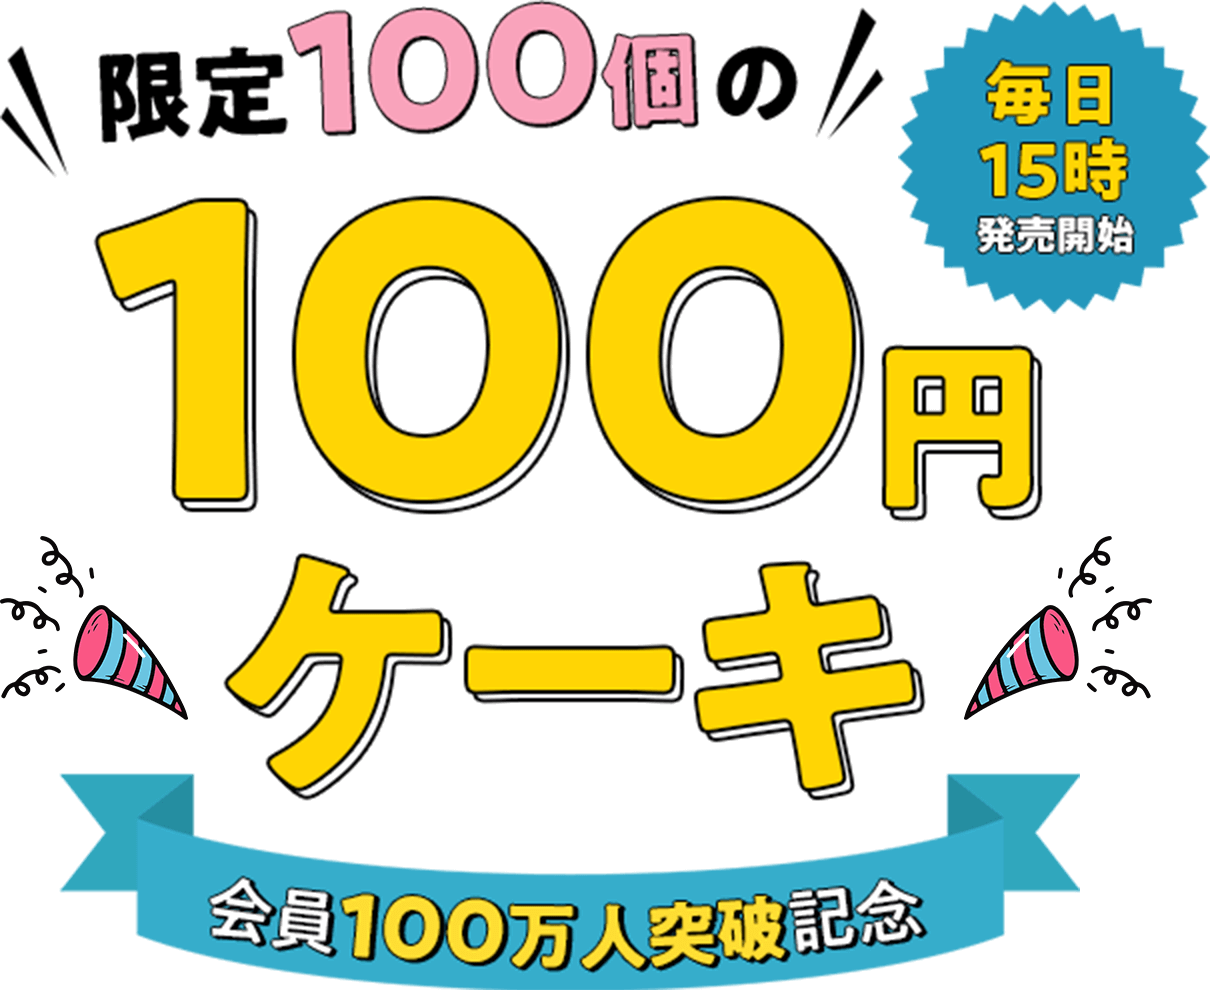 限定100個の100円ケーキ 会員100万人突破記念